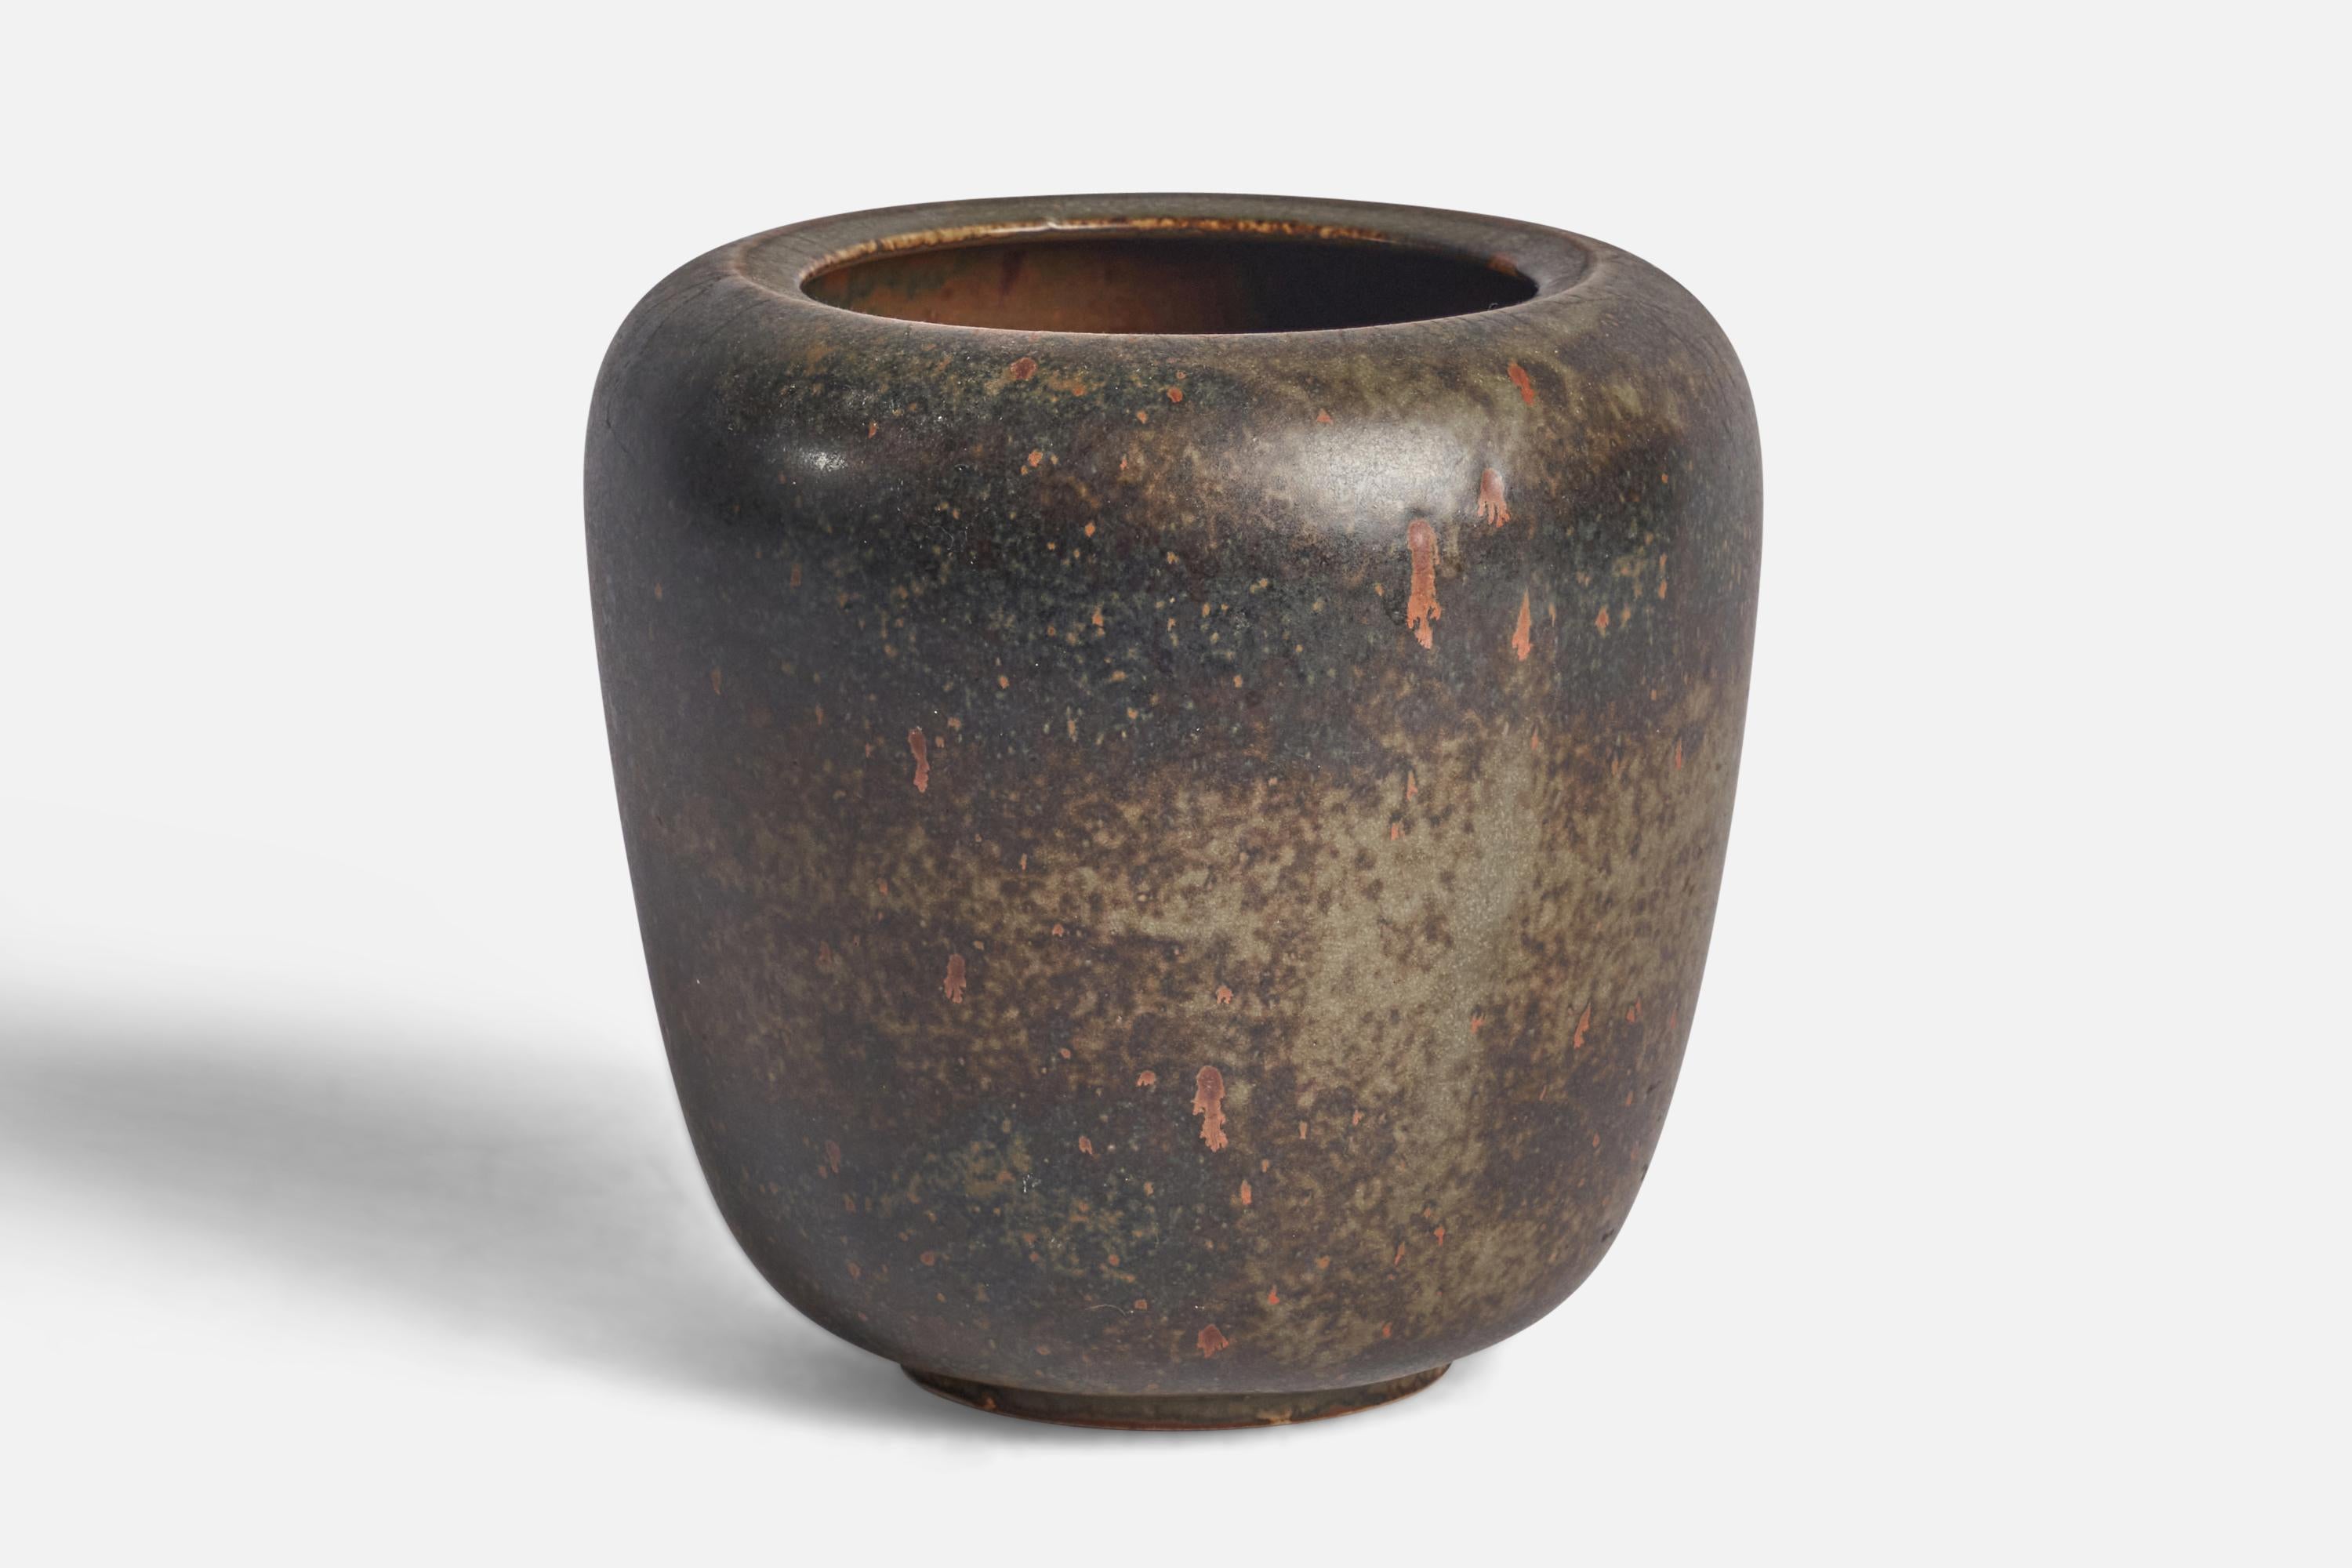 A grey-glazed stoneware vase designed and produced by Saxbo, Denmark, 1950s.

“SAXBO 15” on bottom